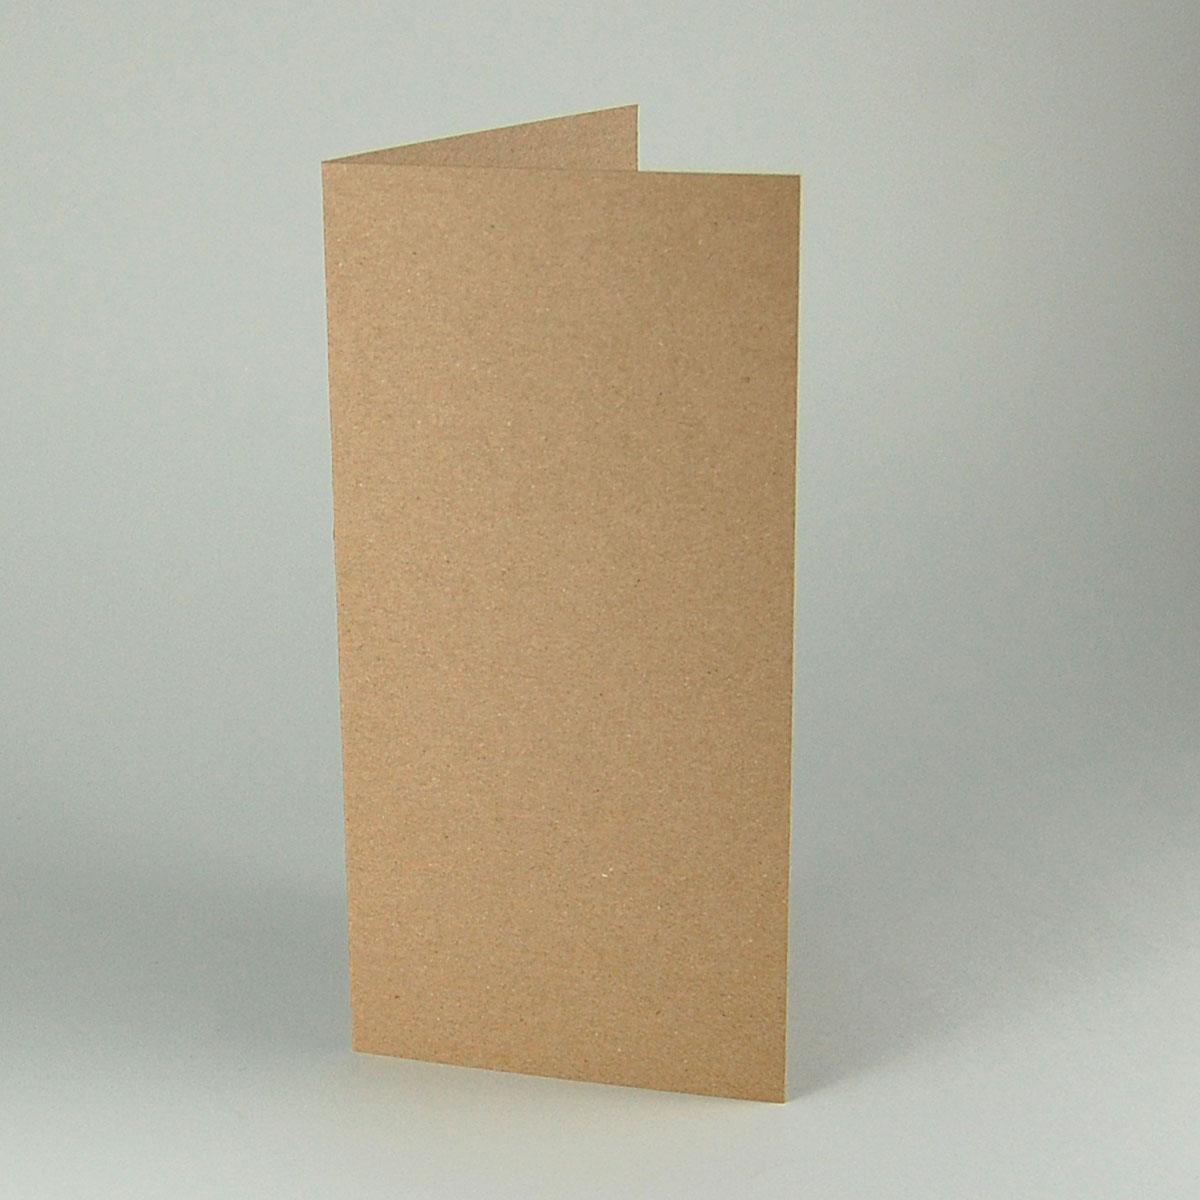 Blanko-Klappkarten aus braunem Recyclingkarton